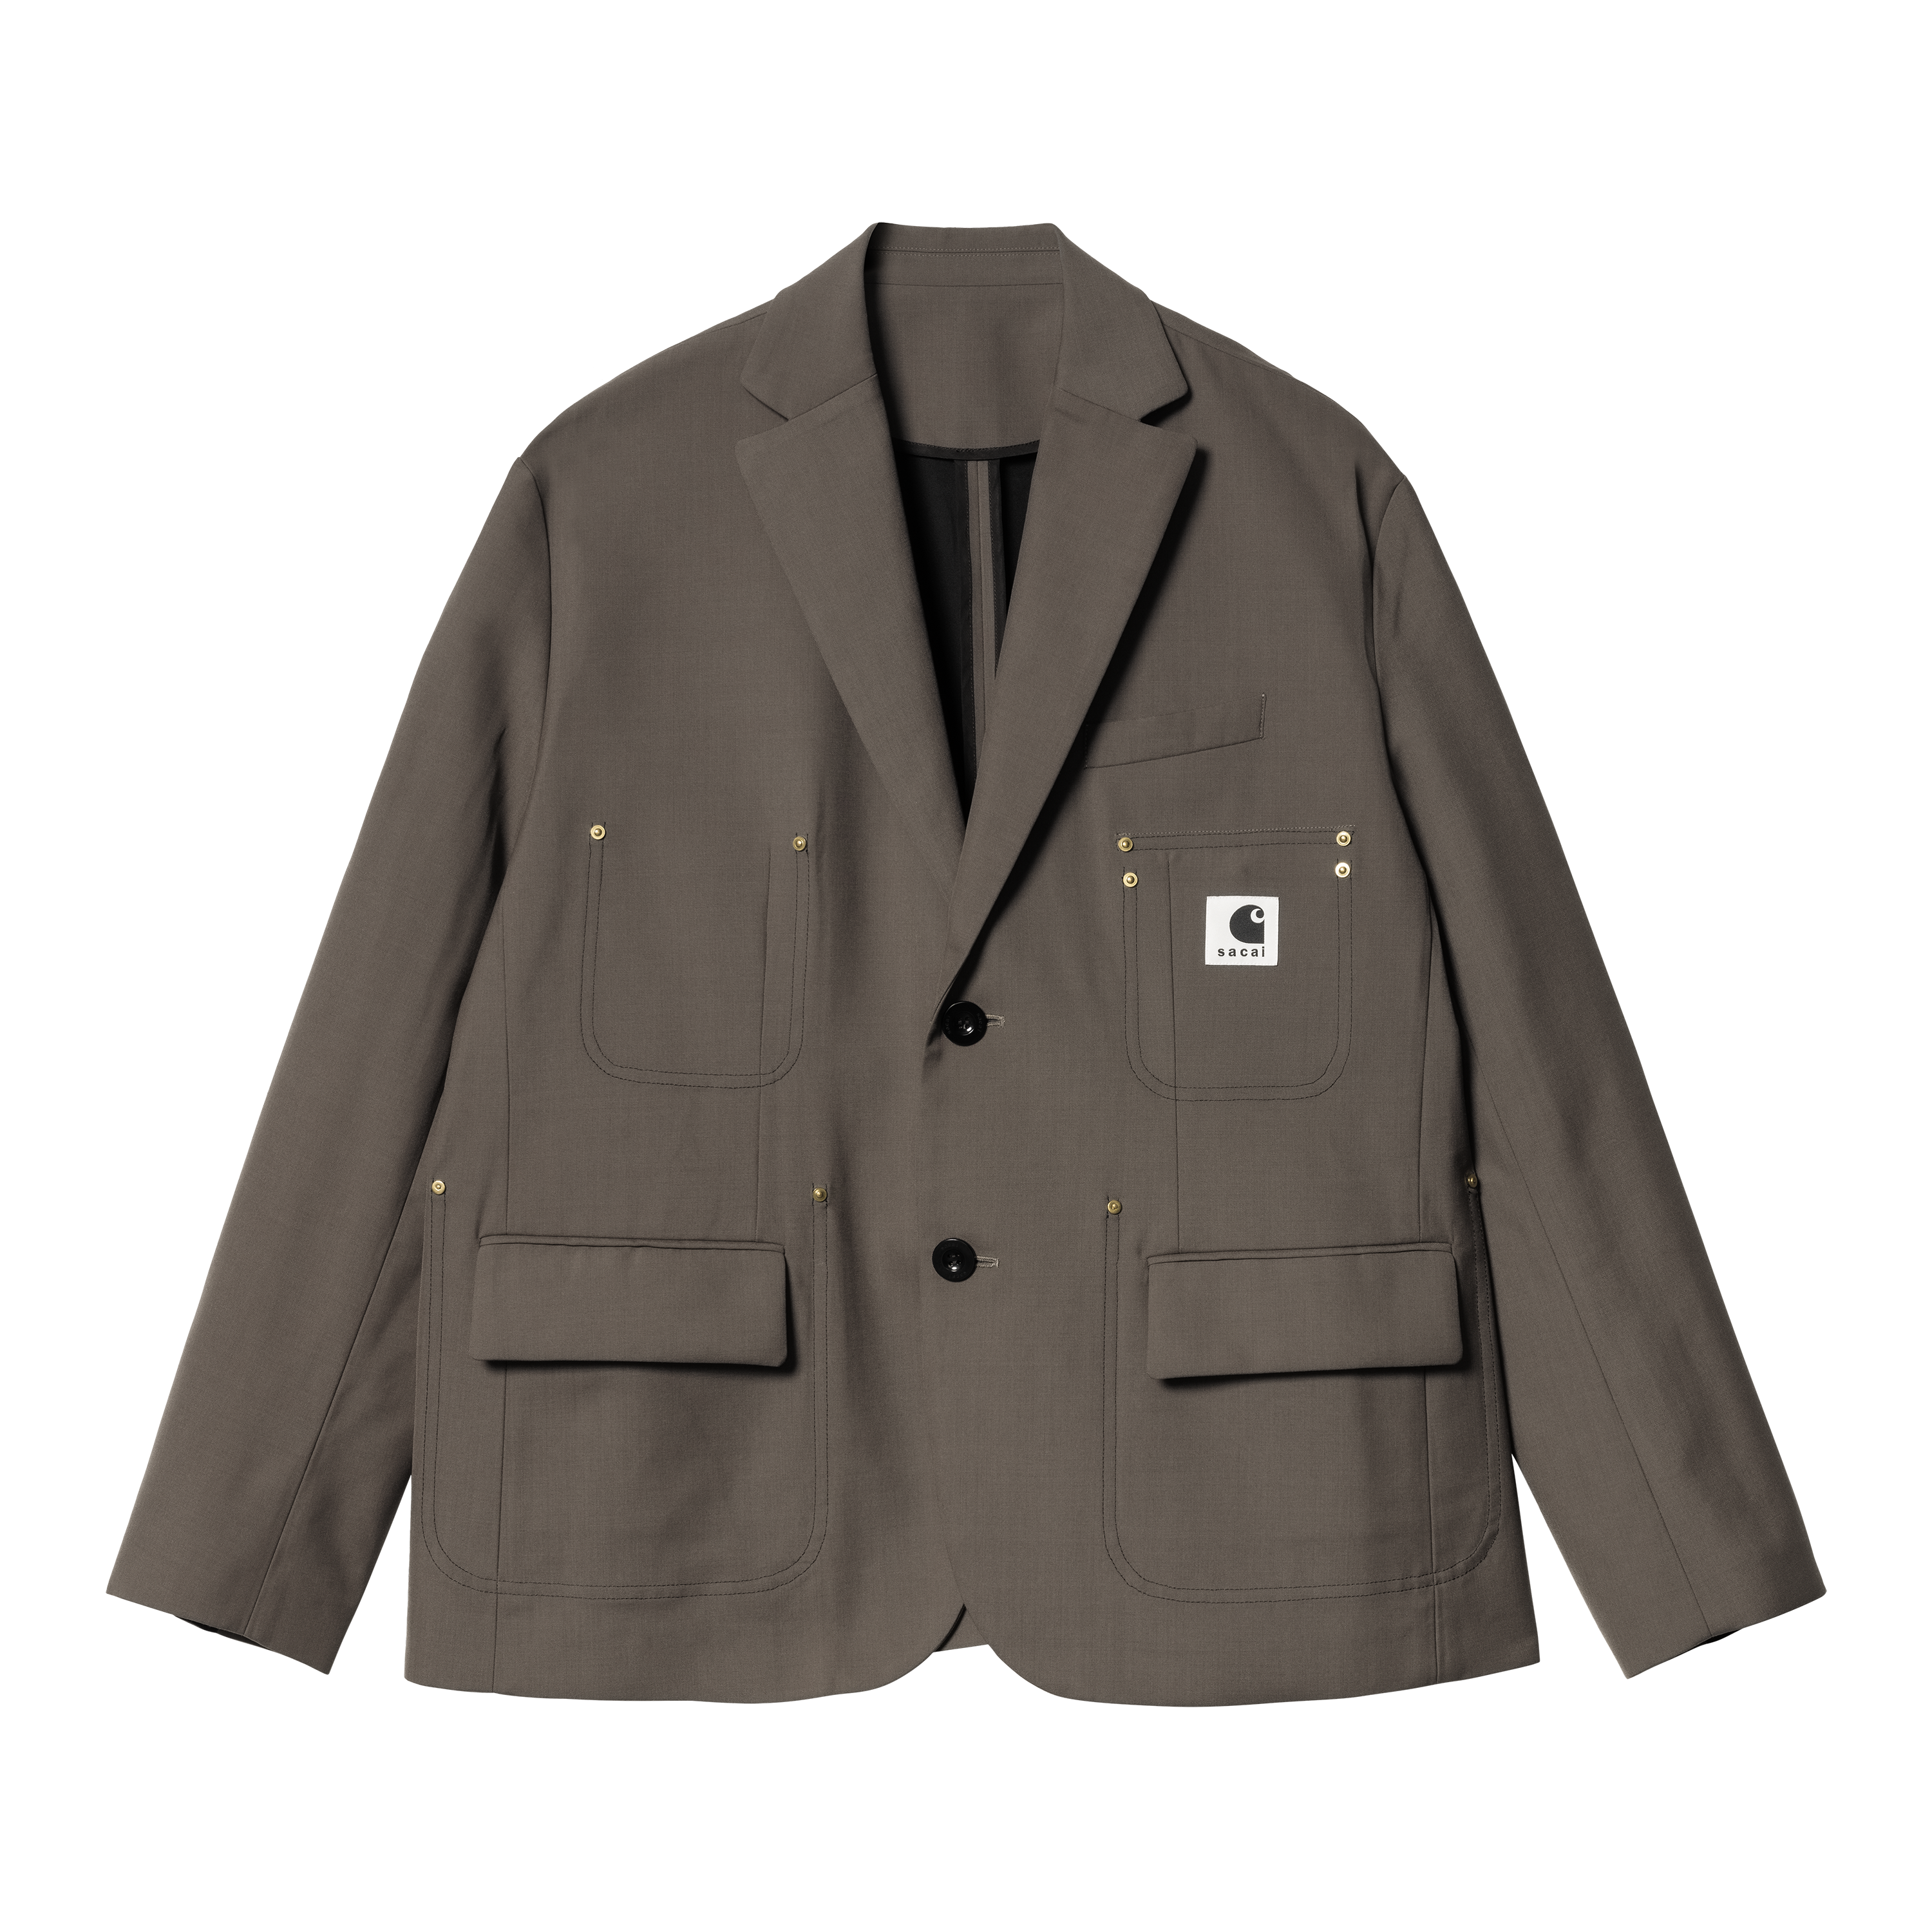 Carhartt WIP sacai x Carhartt WIP Suiting Bonding Jacket 